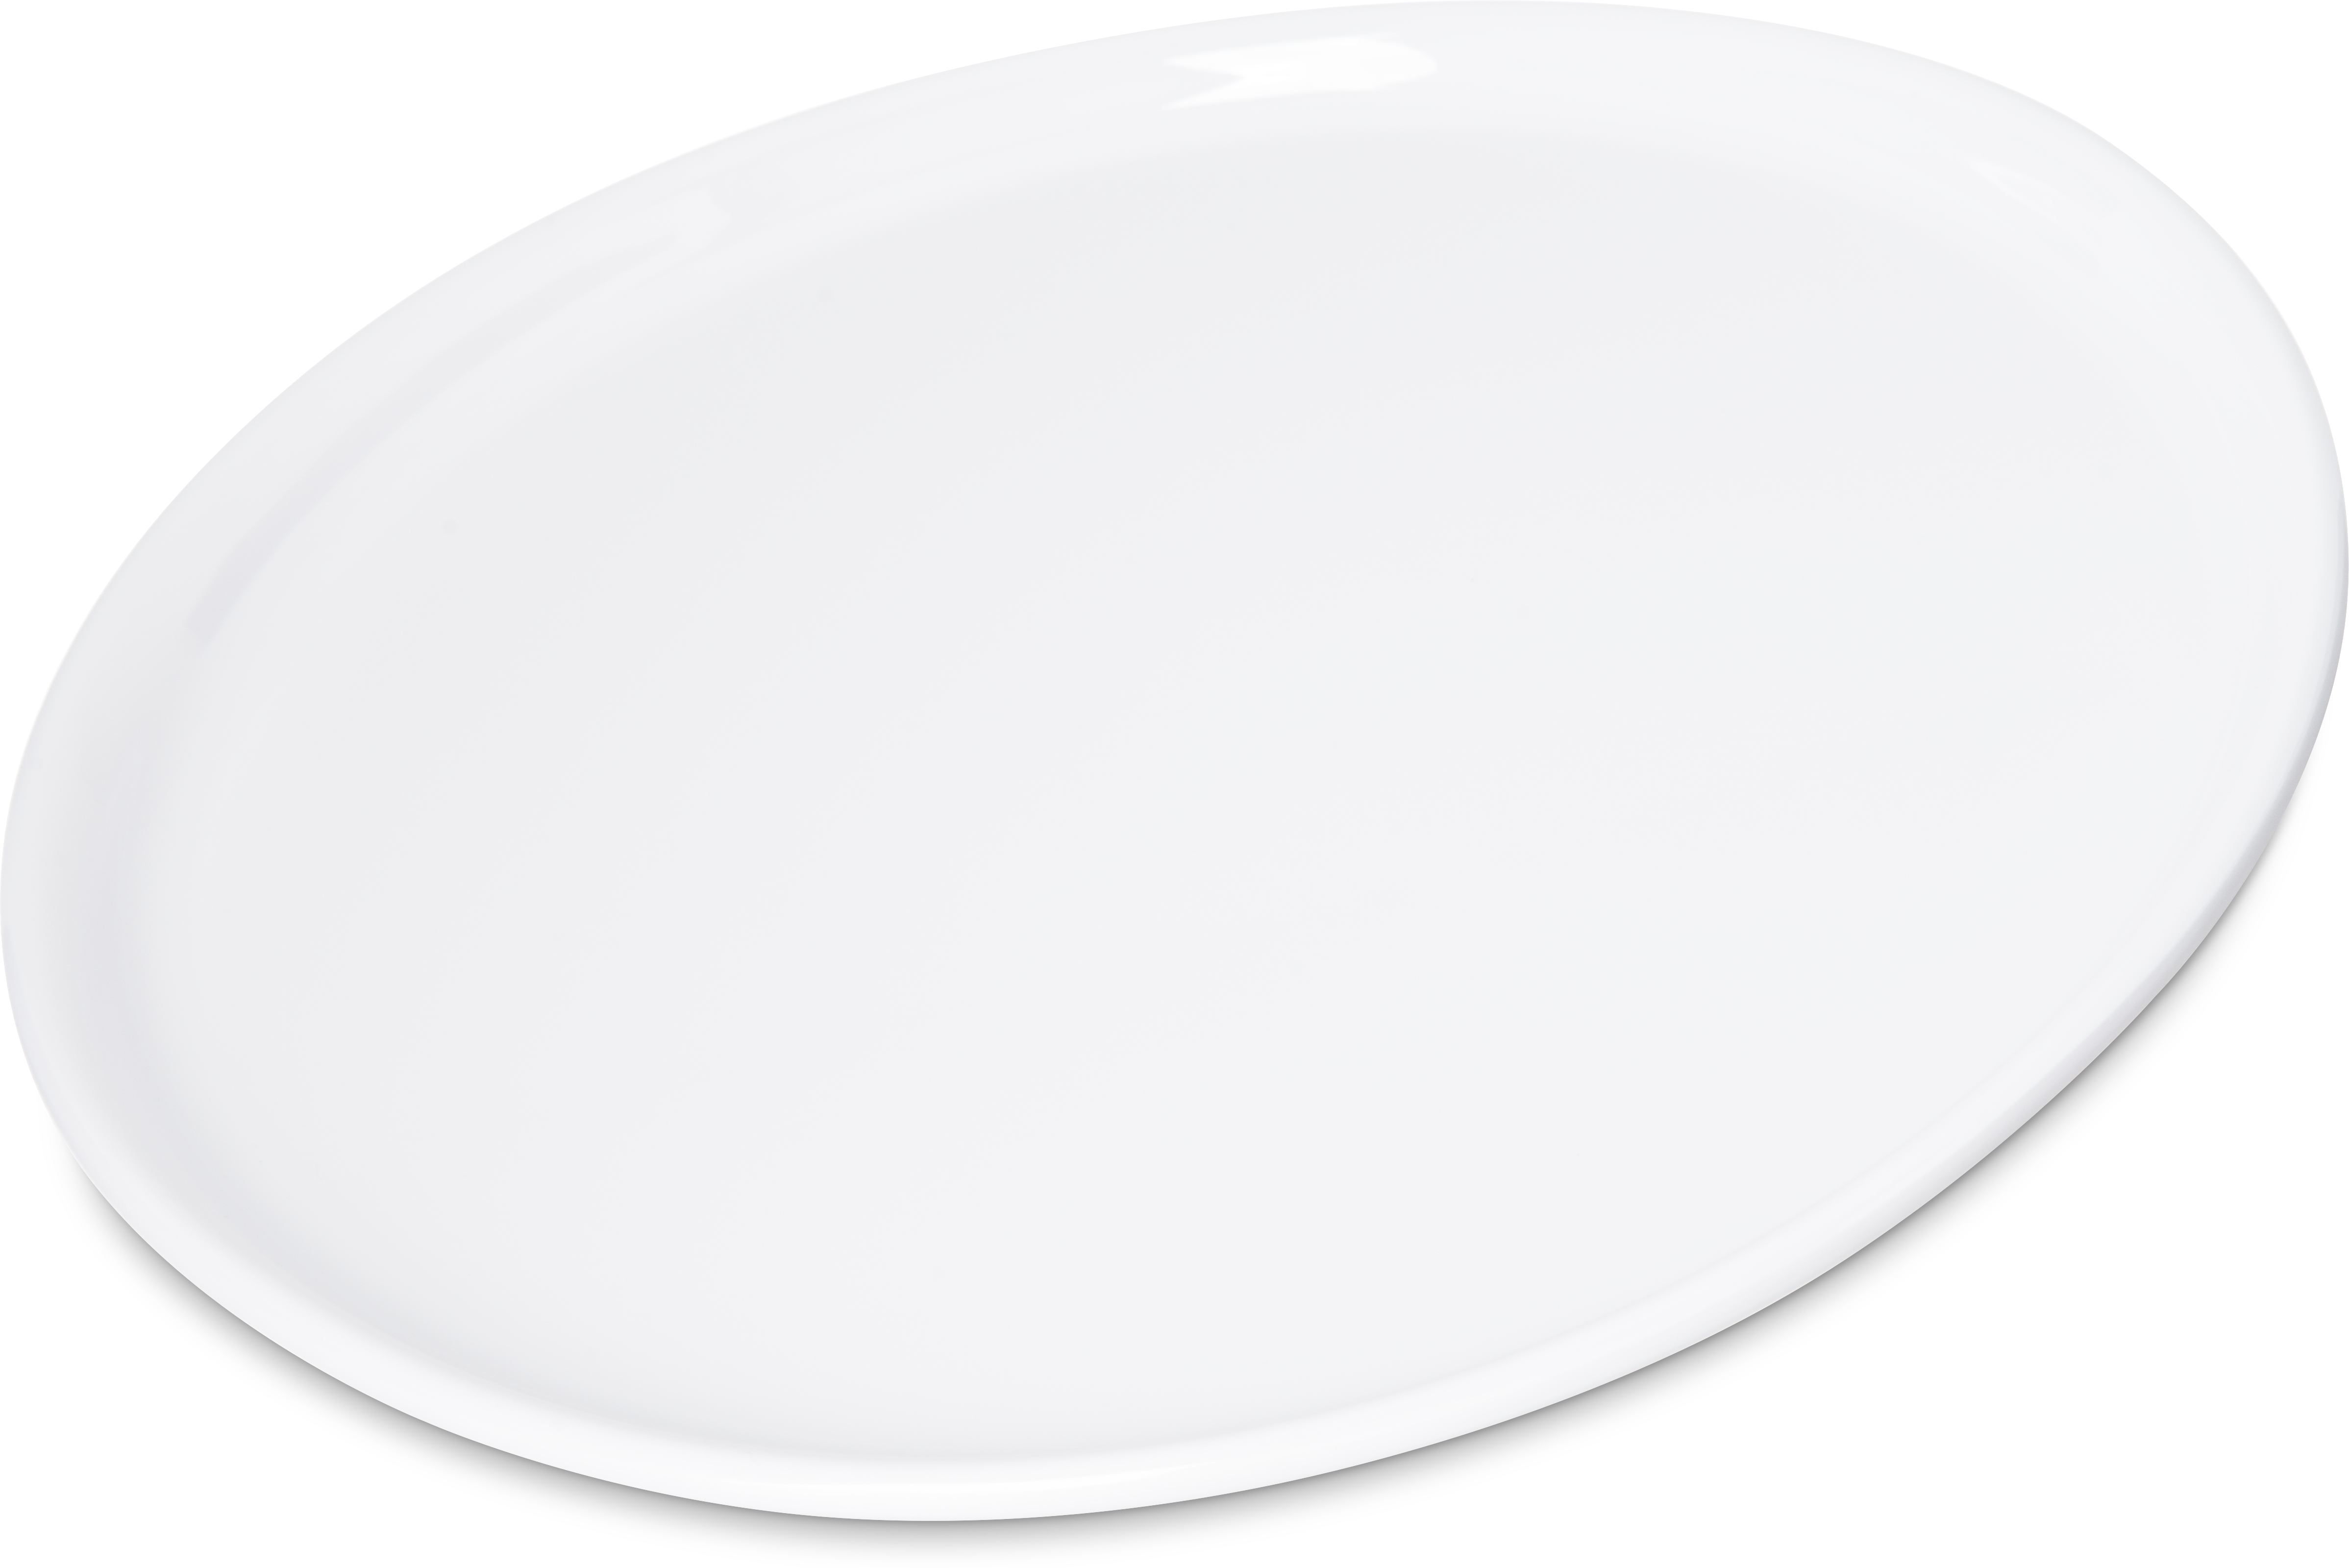 Stadia Melamine Salad Plate 9 - White